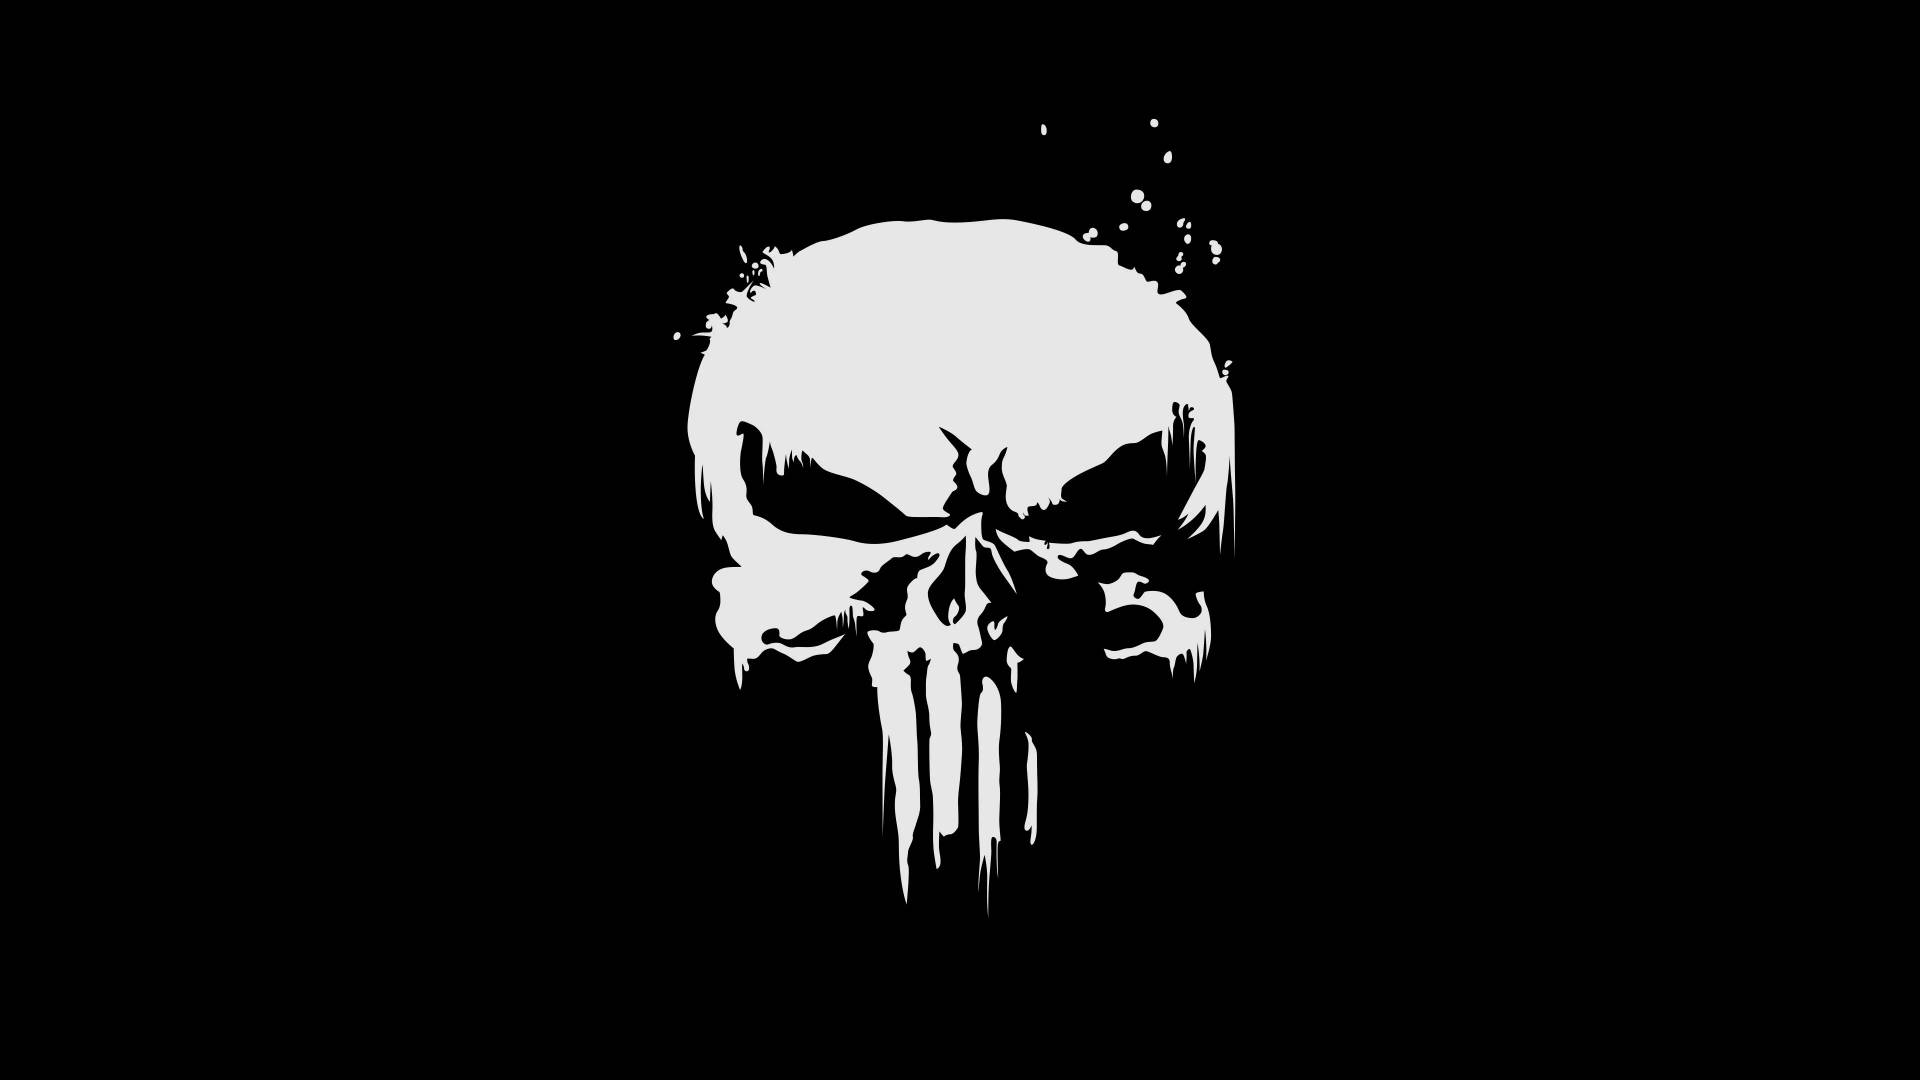 Punisher Logo In Black Background